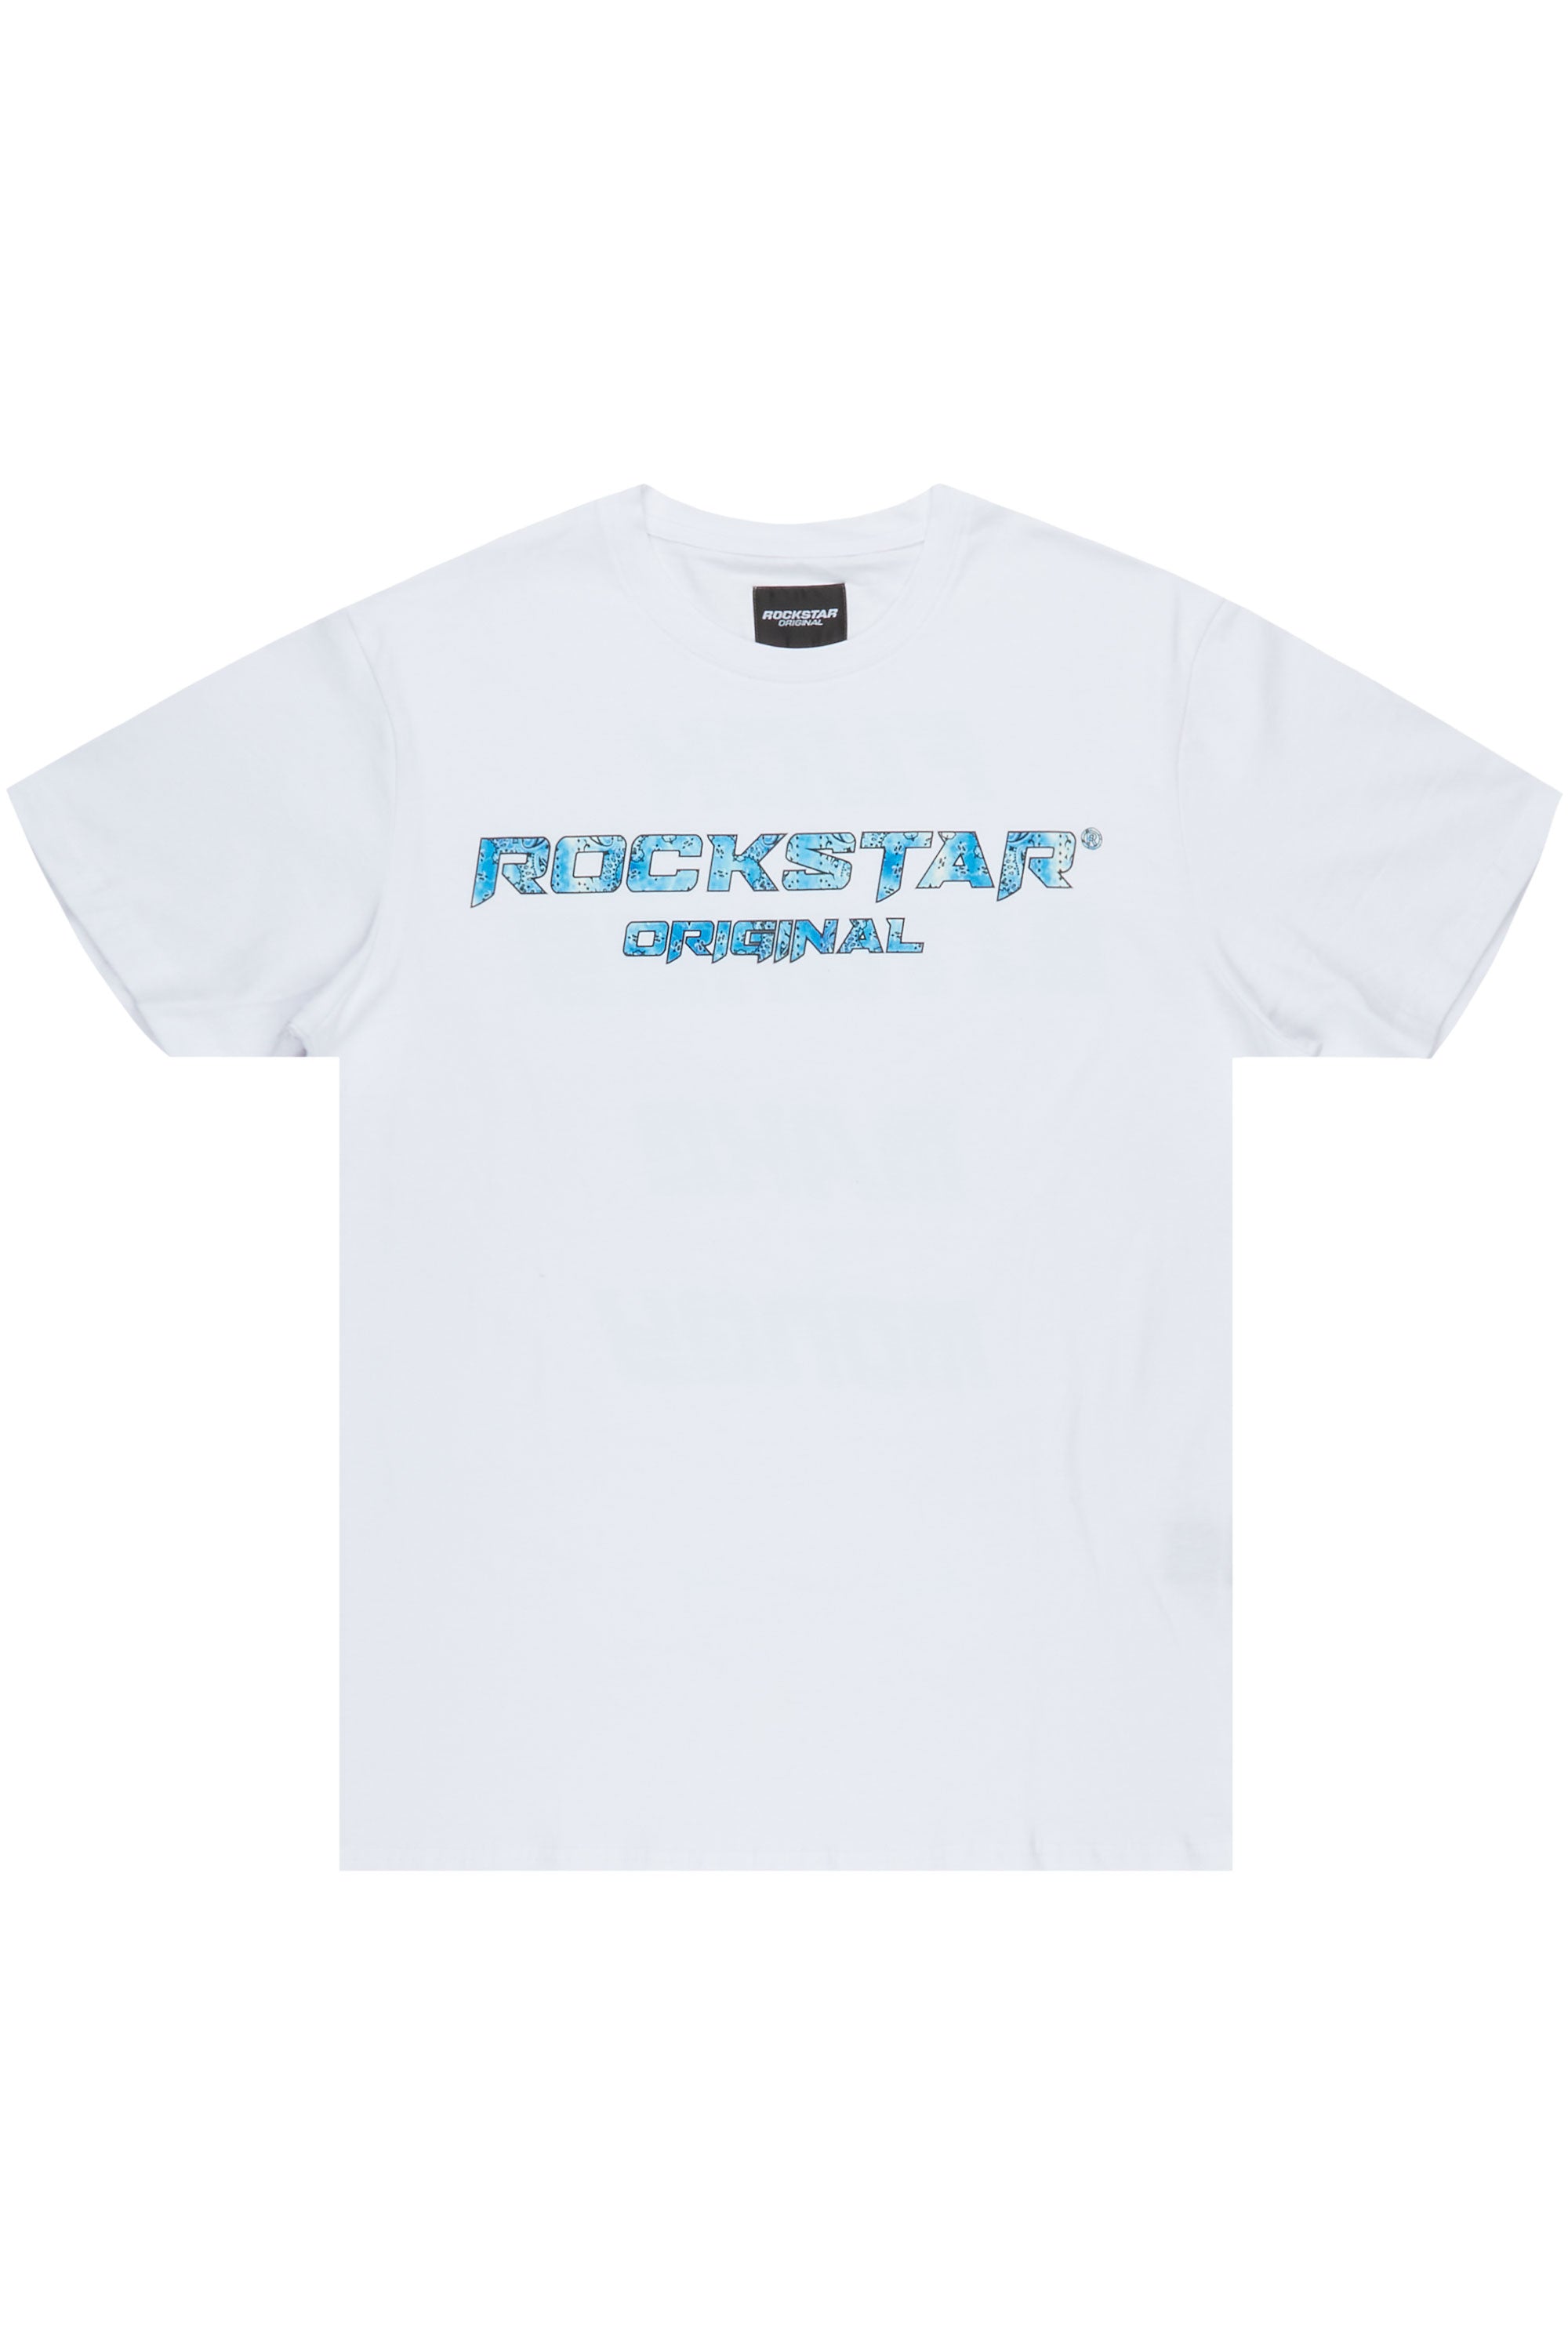 Book White/Blue Graphic T-Shirt